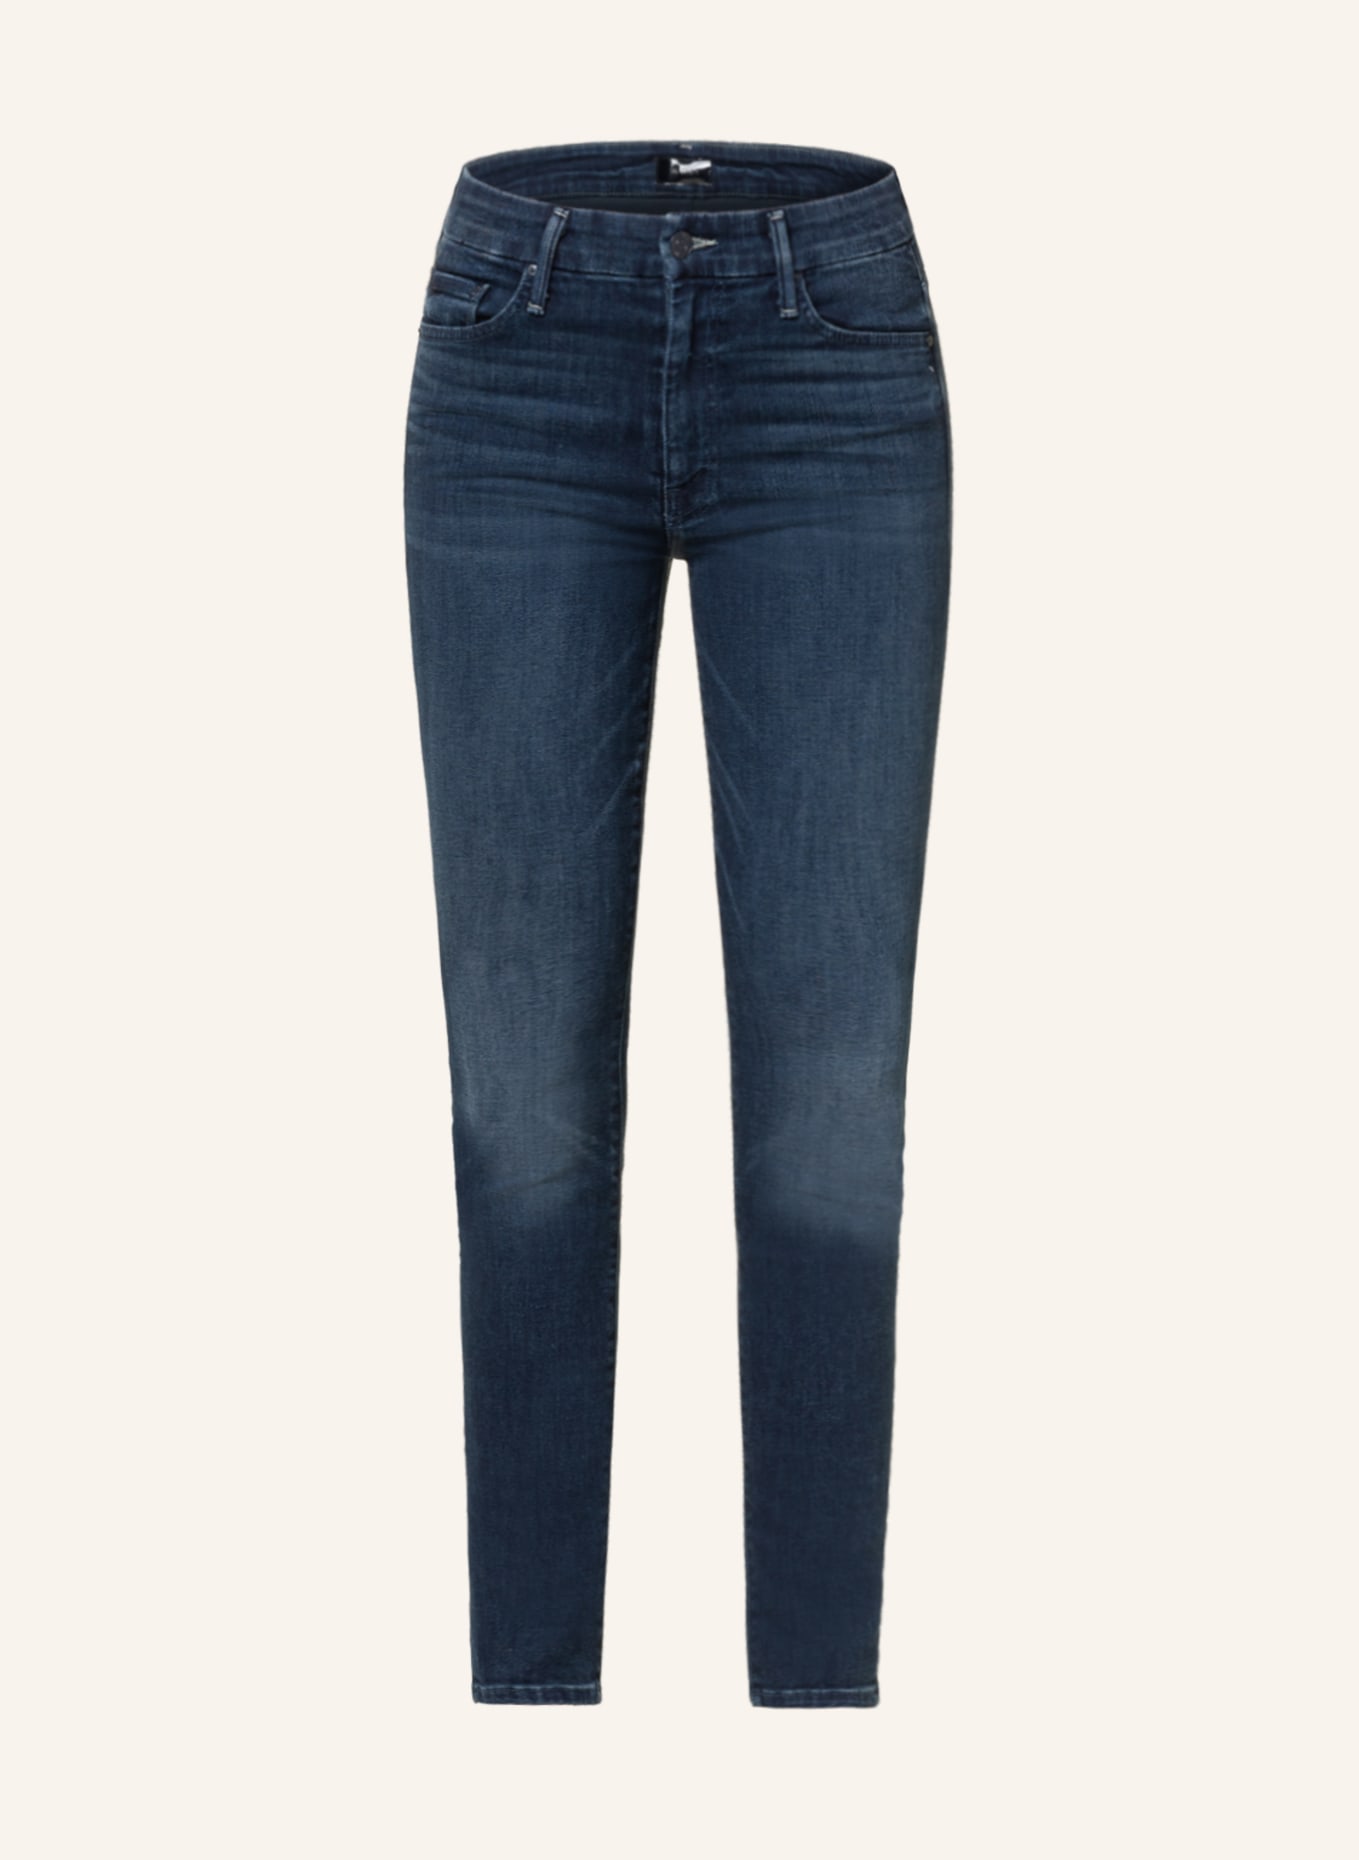 MOTHER Skinny Jeans HIGH WAISTED LOOKER, Farbe: GFY dublau (Bild 1)